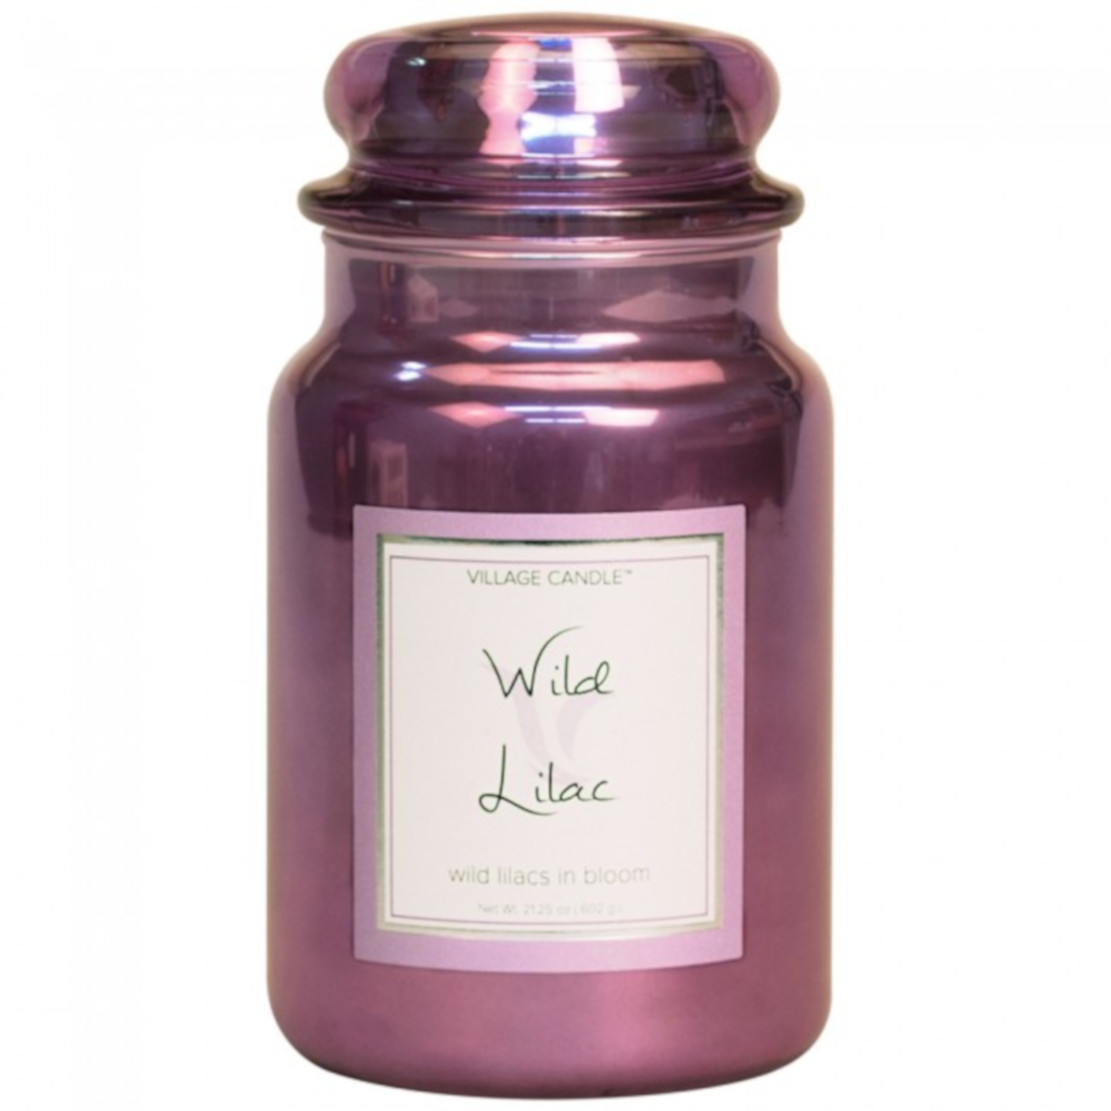 Village Wild LilacLarge Jar Candle 602g